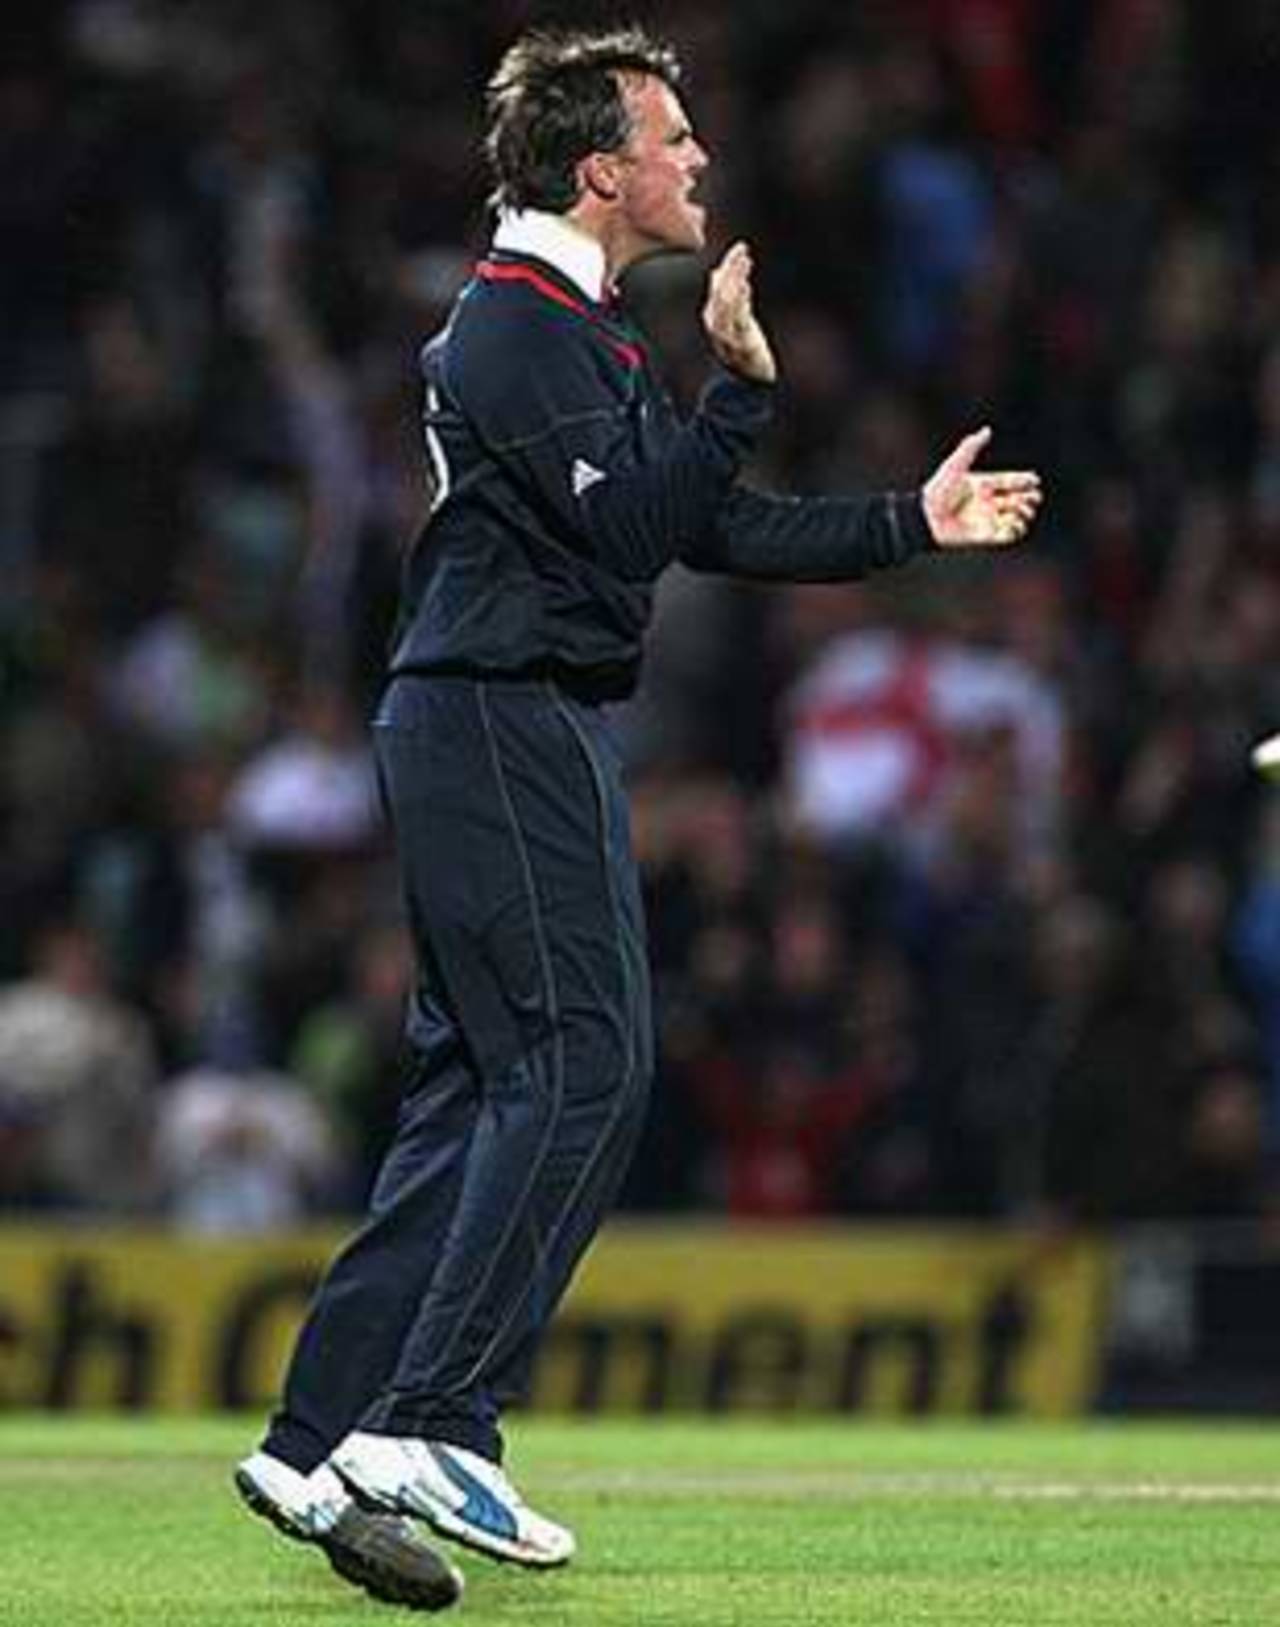 Graeme Swann celebrates the wicket of Shahid Afridi, England v Pakistan, ICC World Twenty20, The Oval, June 7, 2009